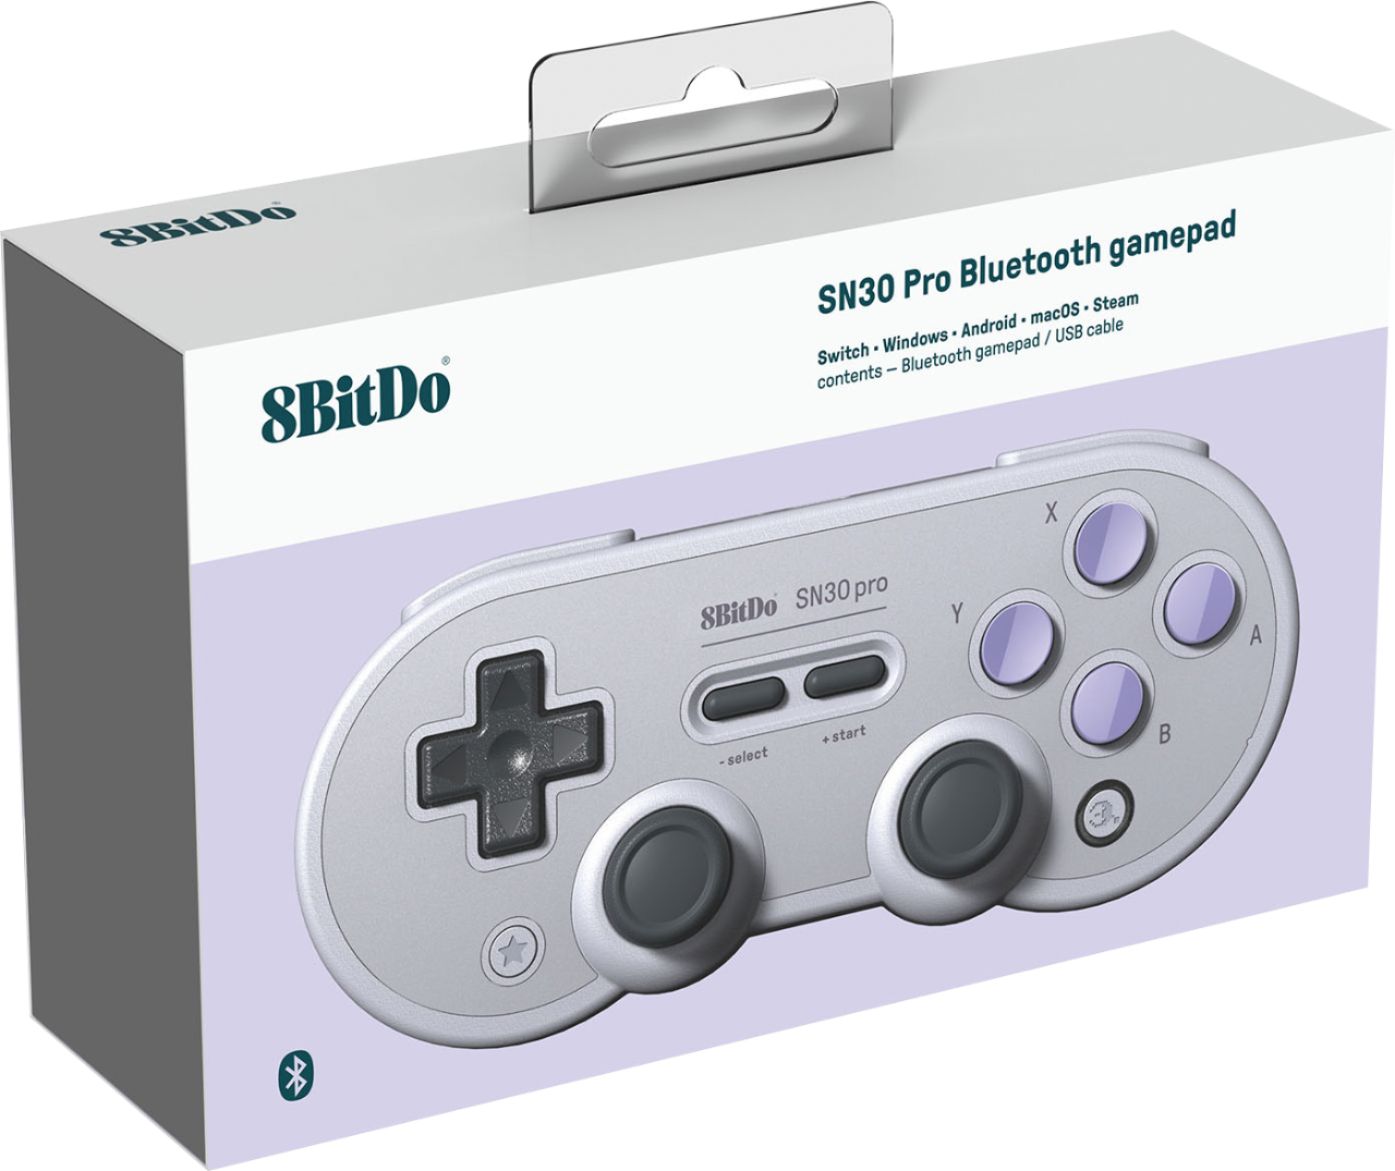 8BitDo SN30 Pro